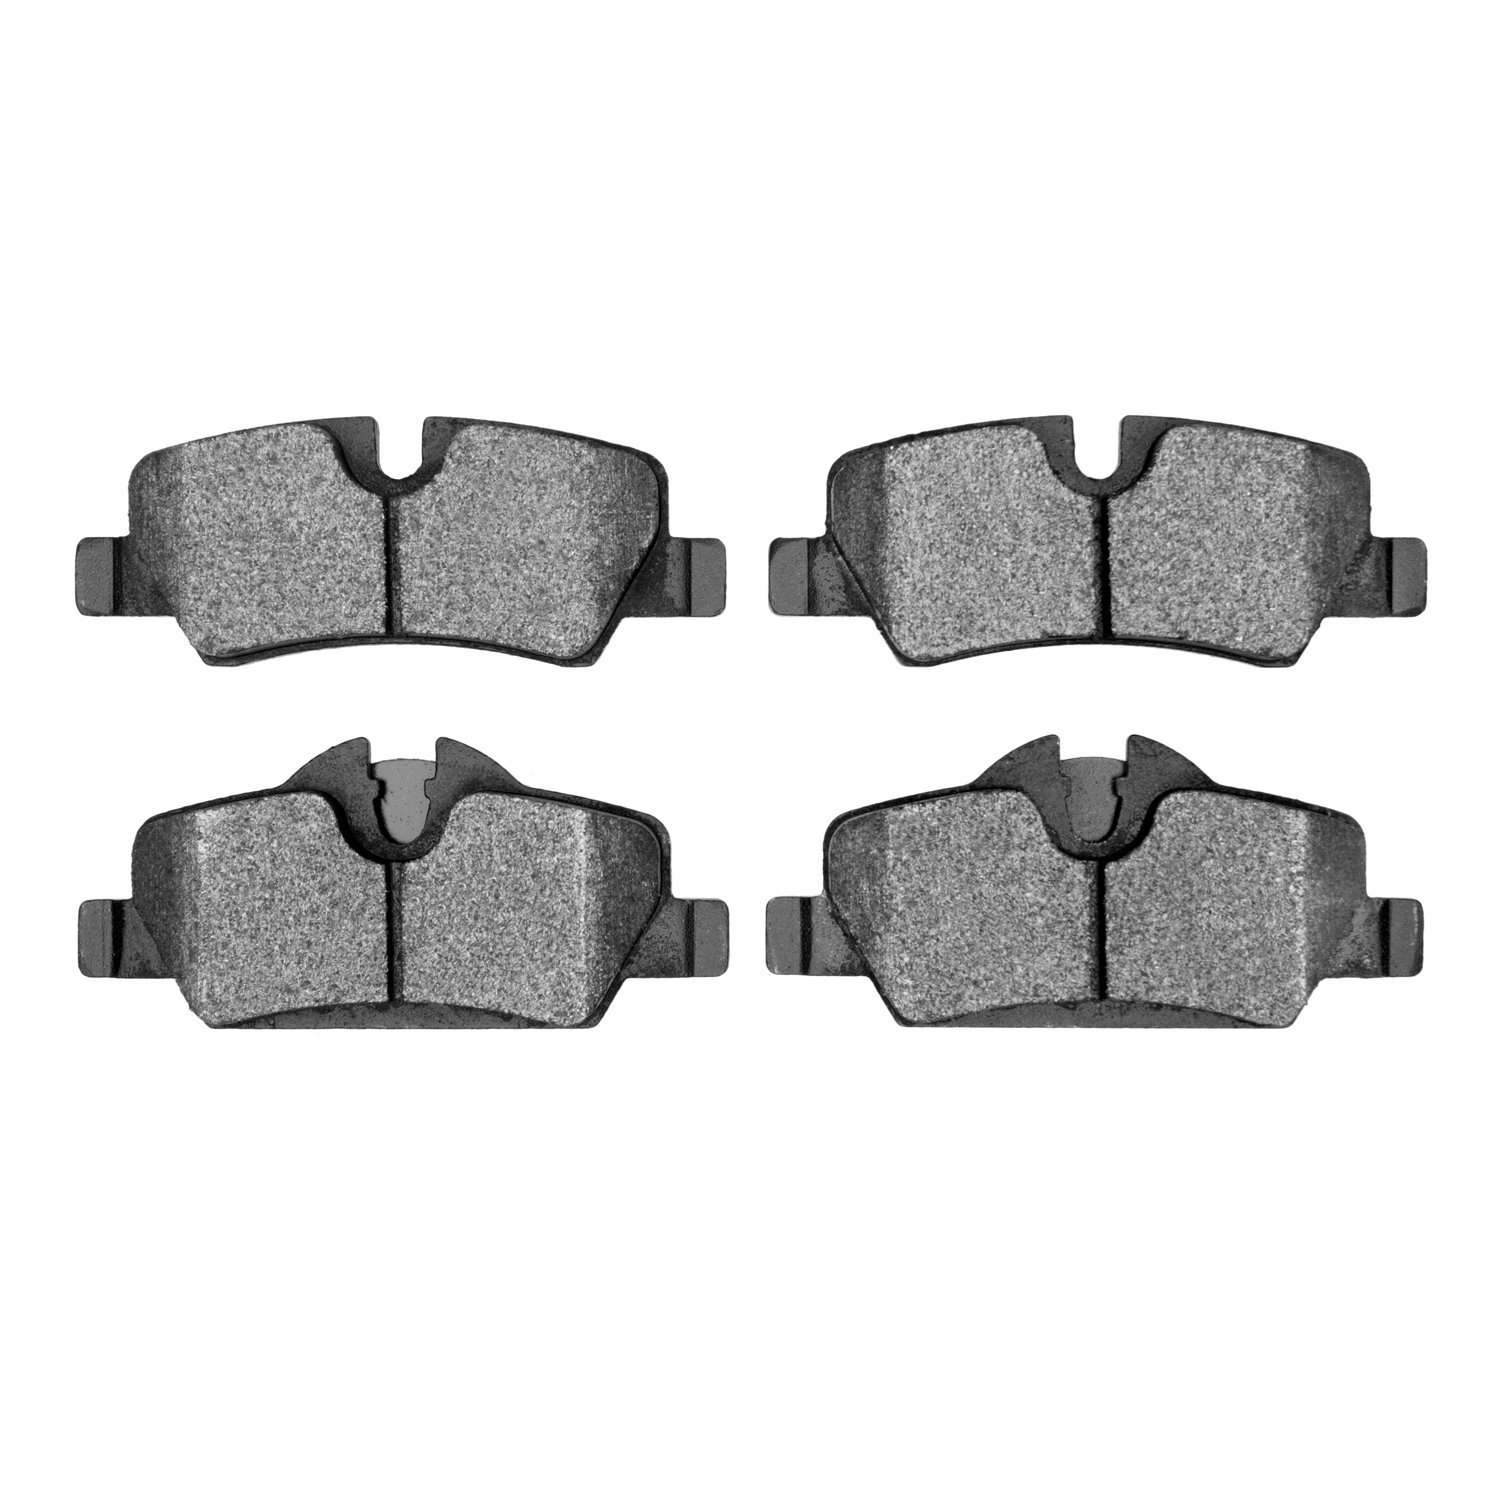 Euro Ceramic Brake Pads, Fits Select Mini, Position: Rear